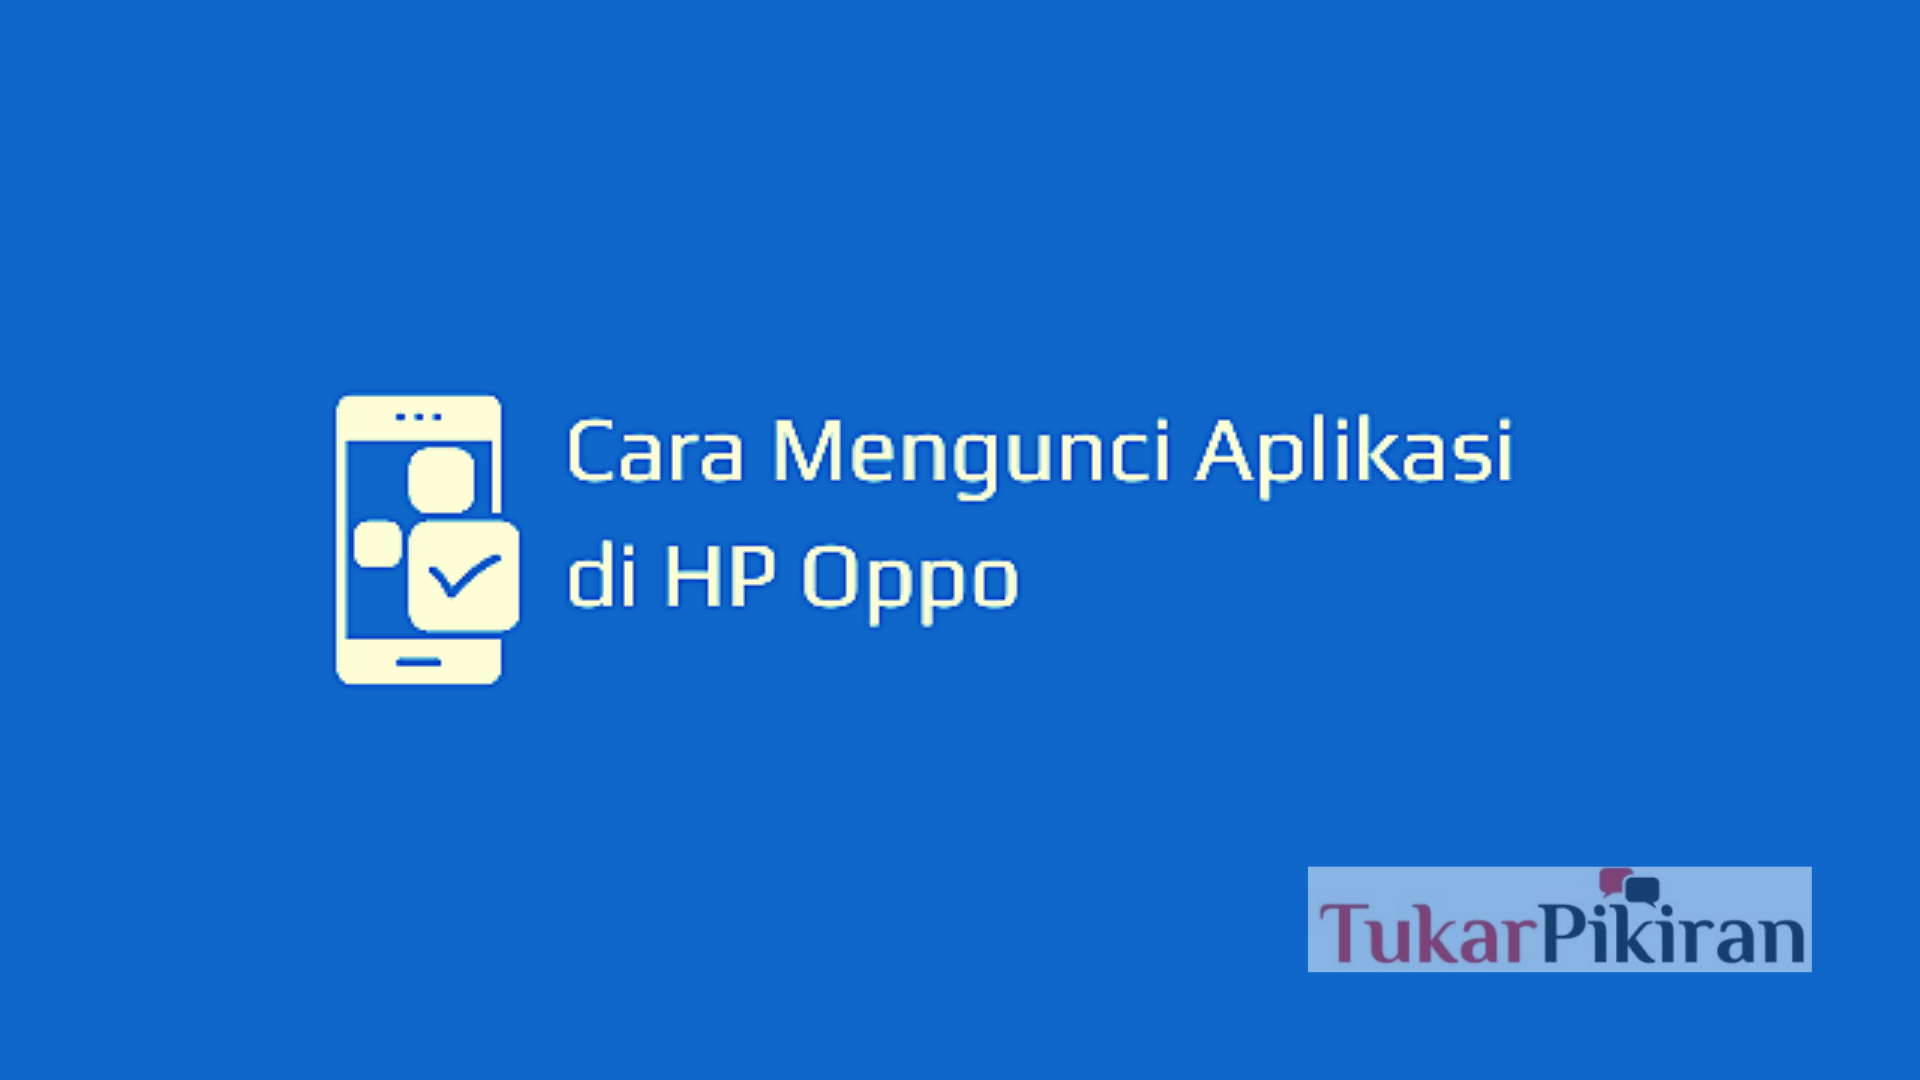 Cara Mengunci Aplikasi di HP Oppo Tanpa Ribet